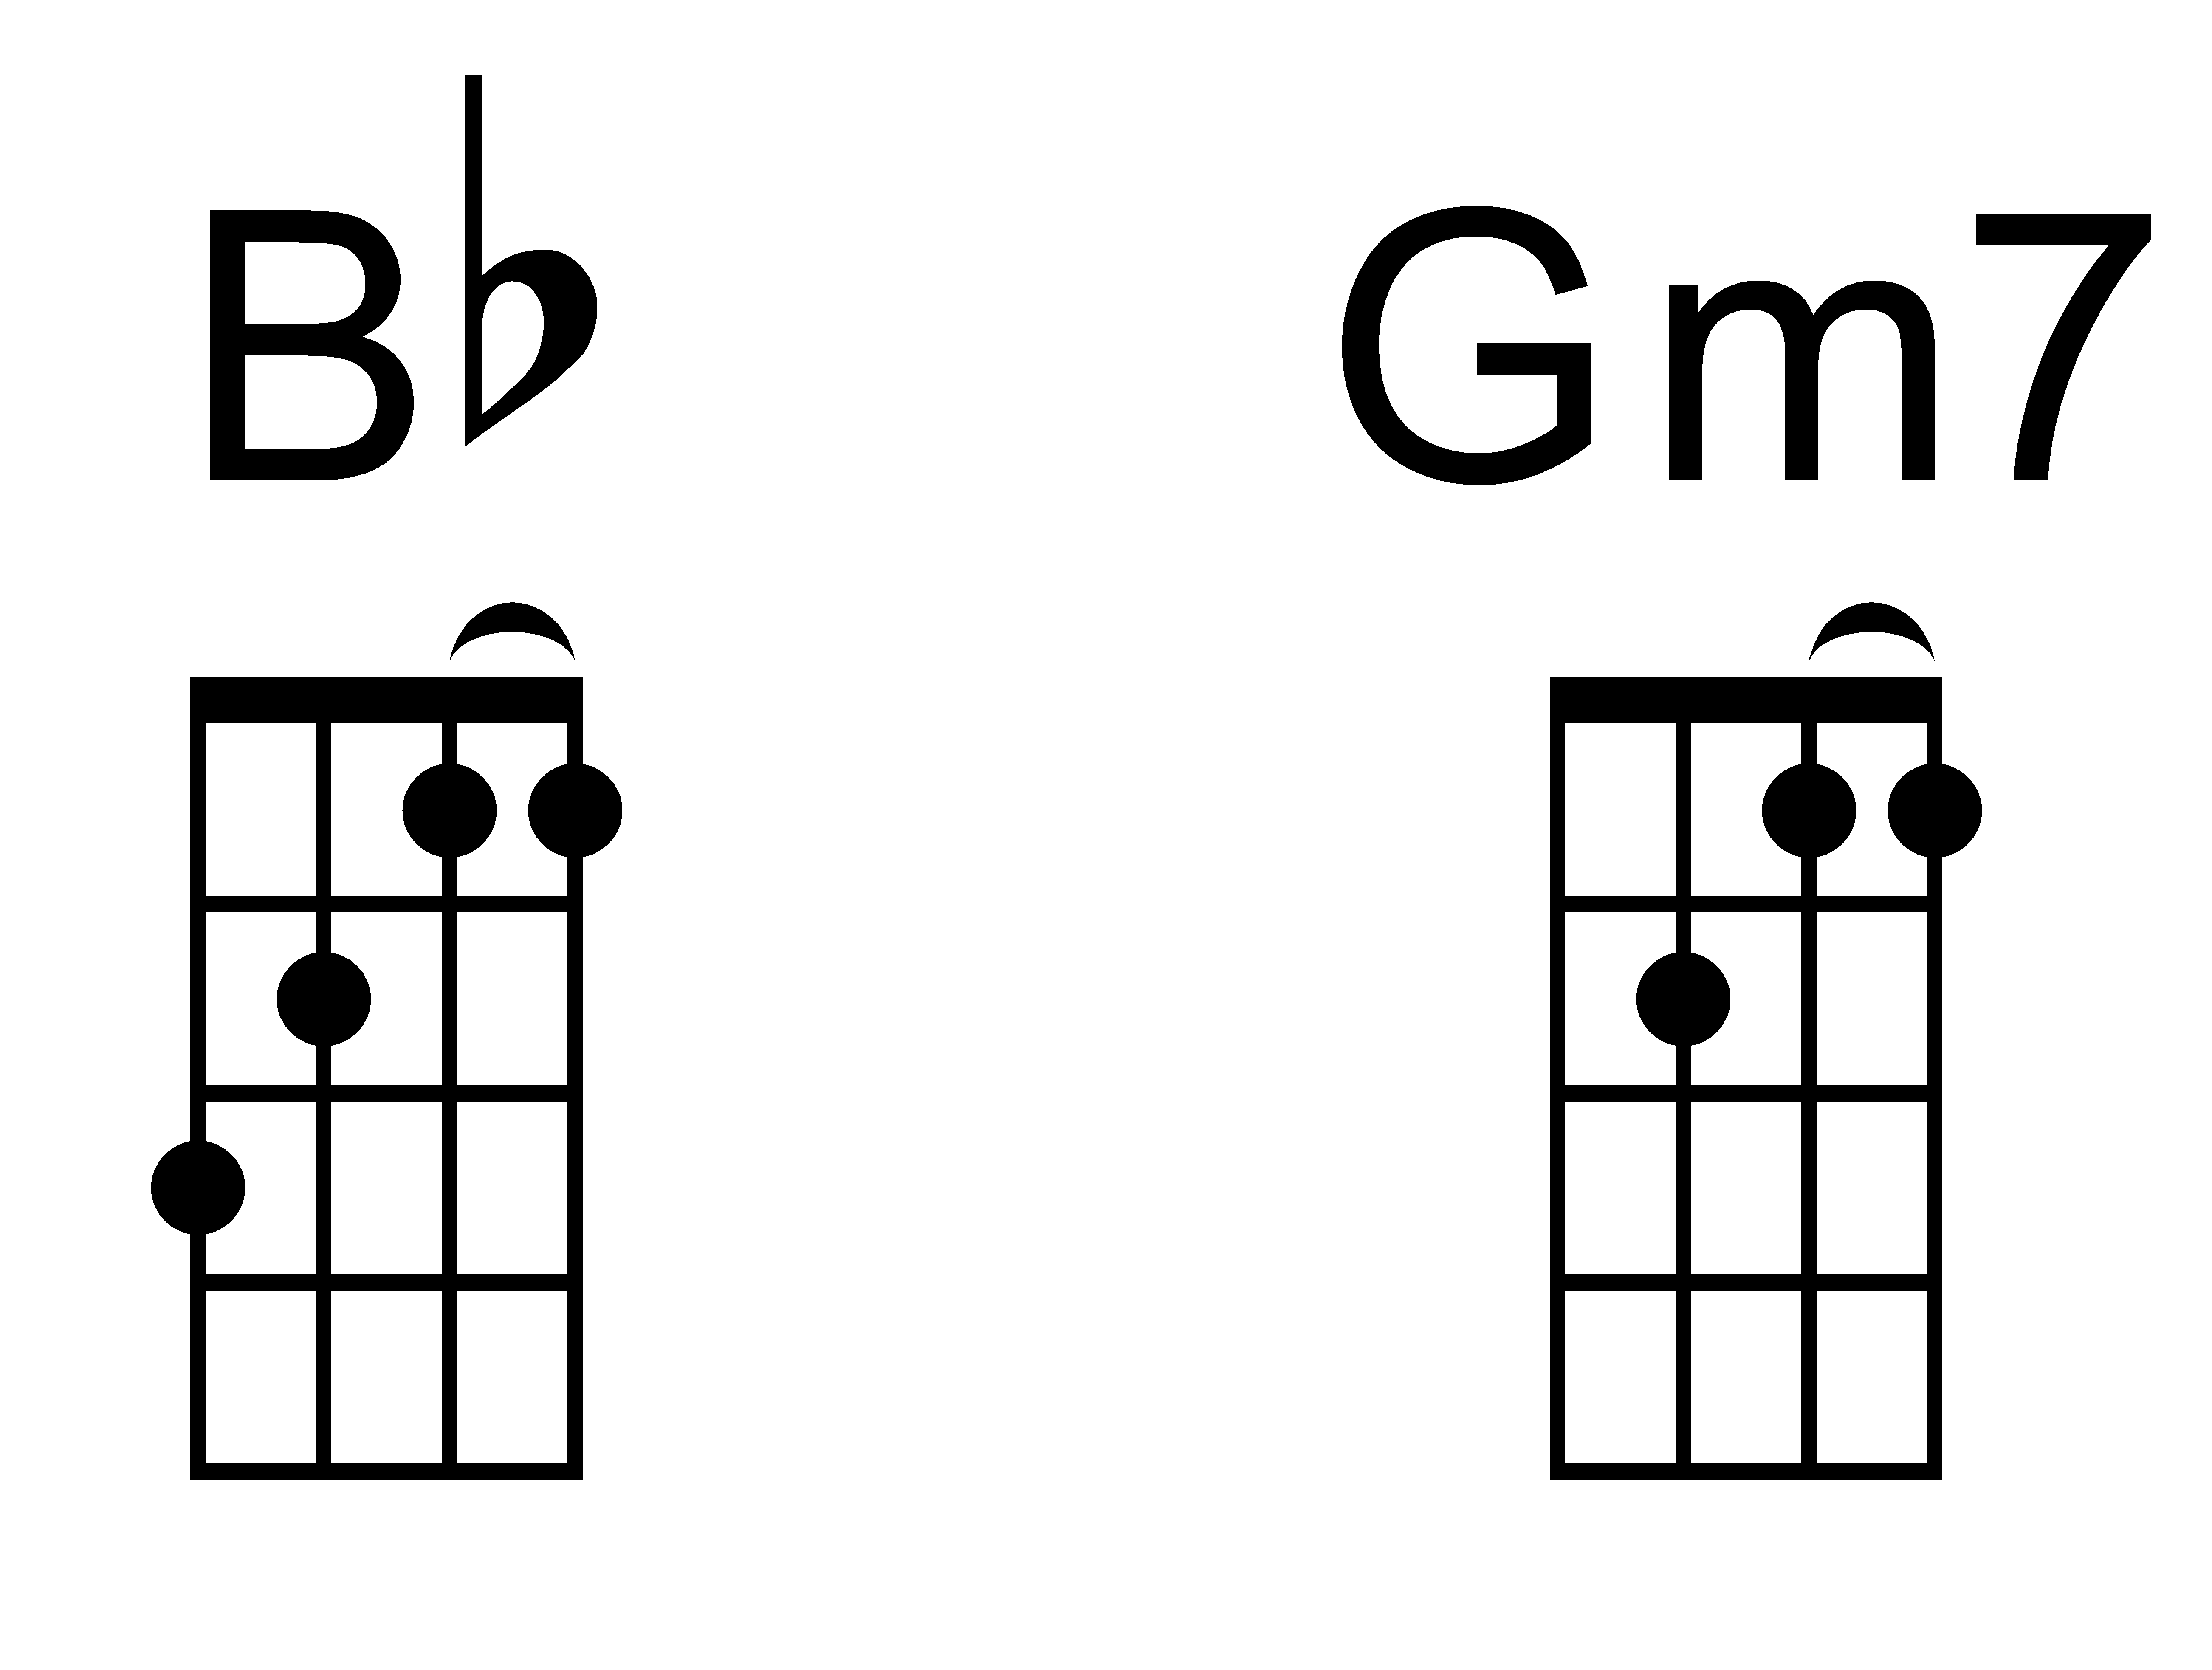 ... the F chord for the Baritone Uke as well) Â» B flat and G min7 chords